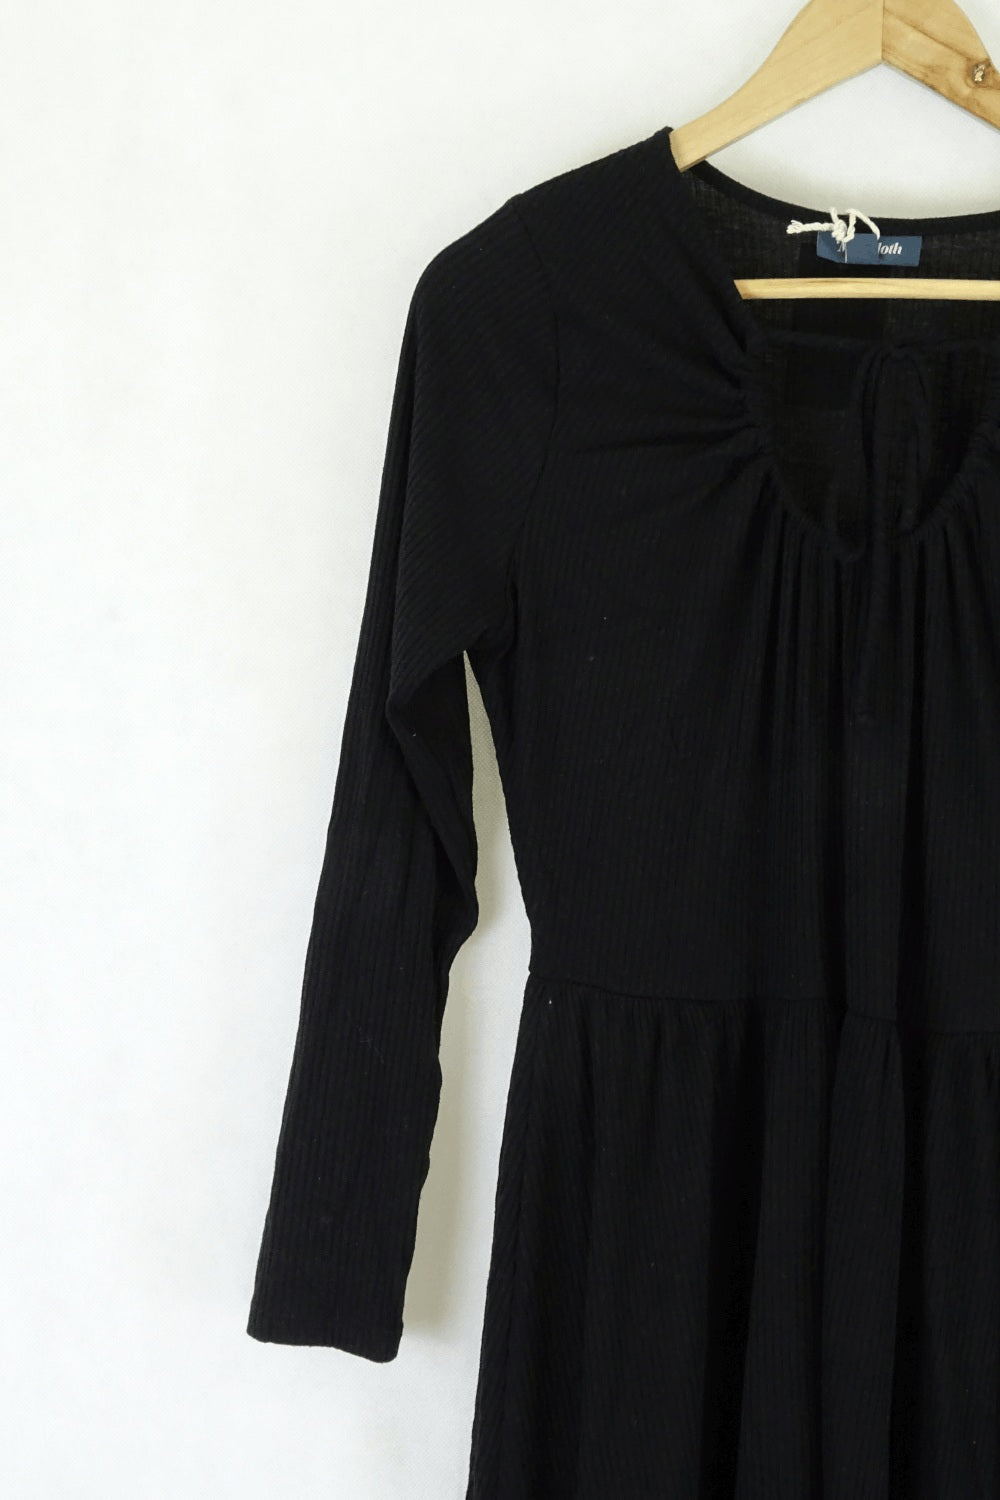 Modcloth Black Dress M